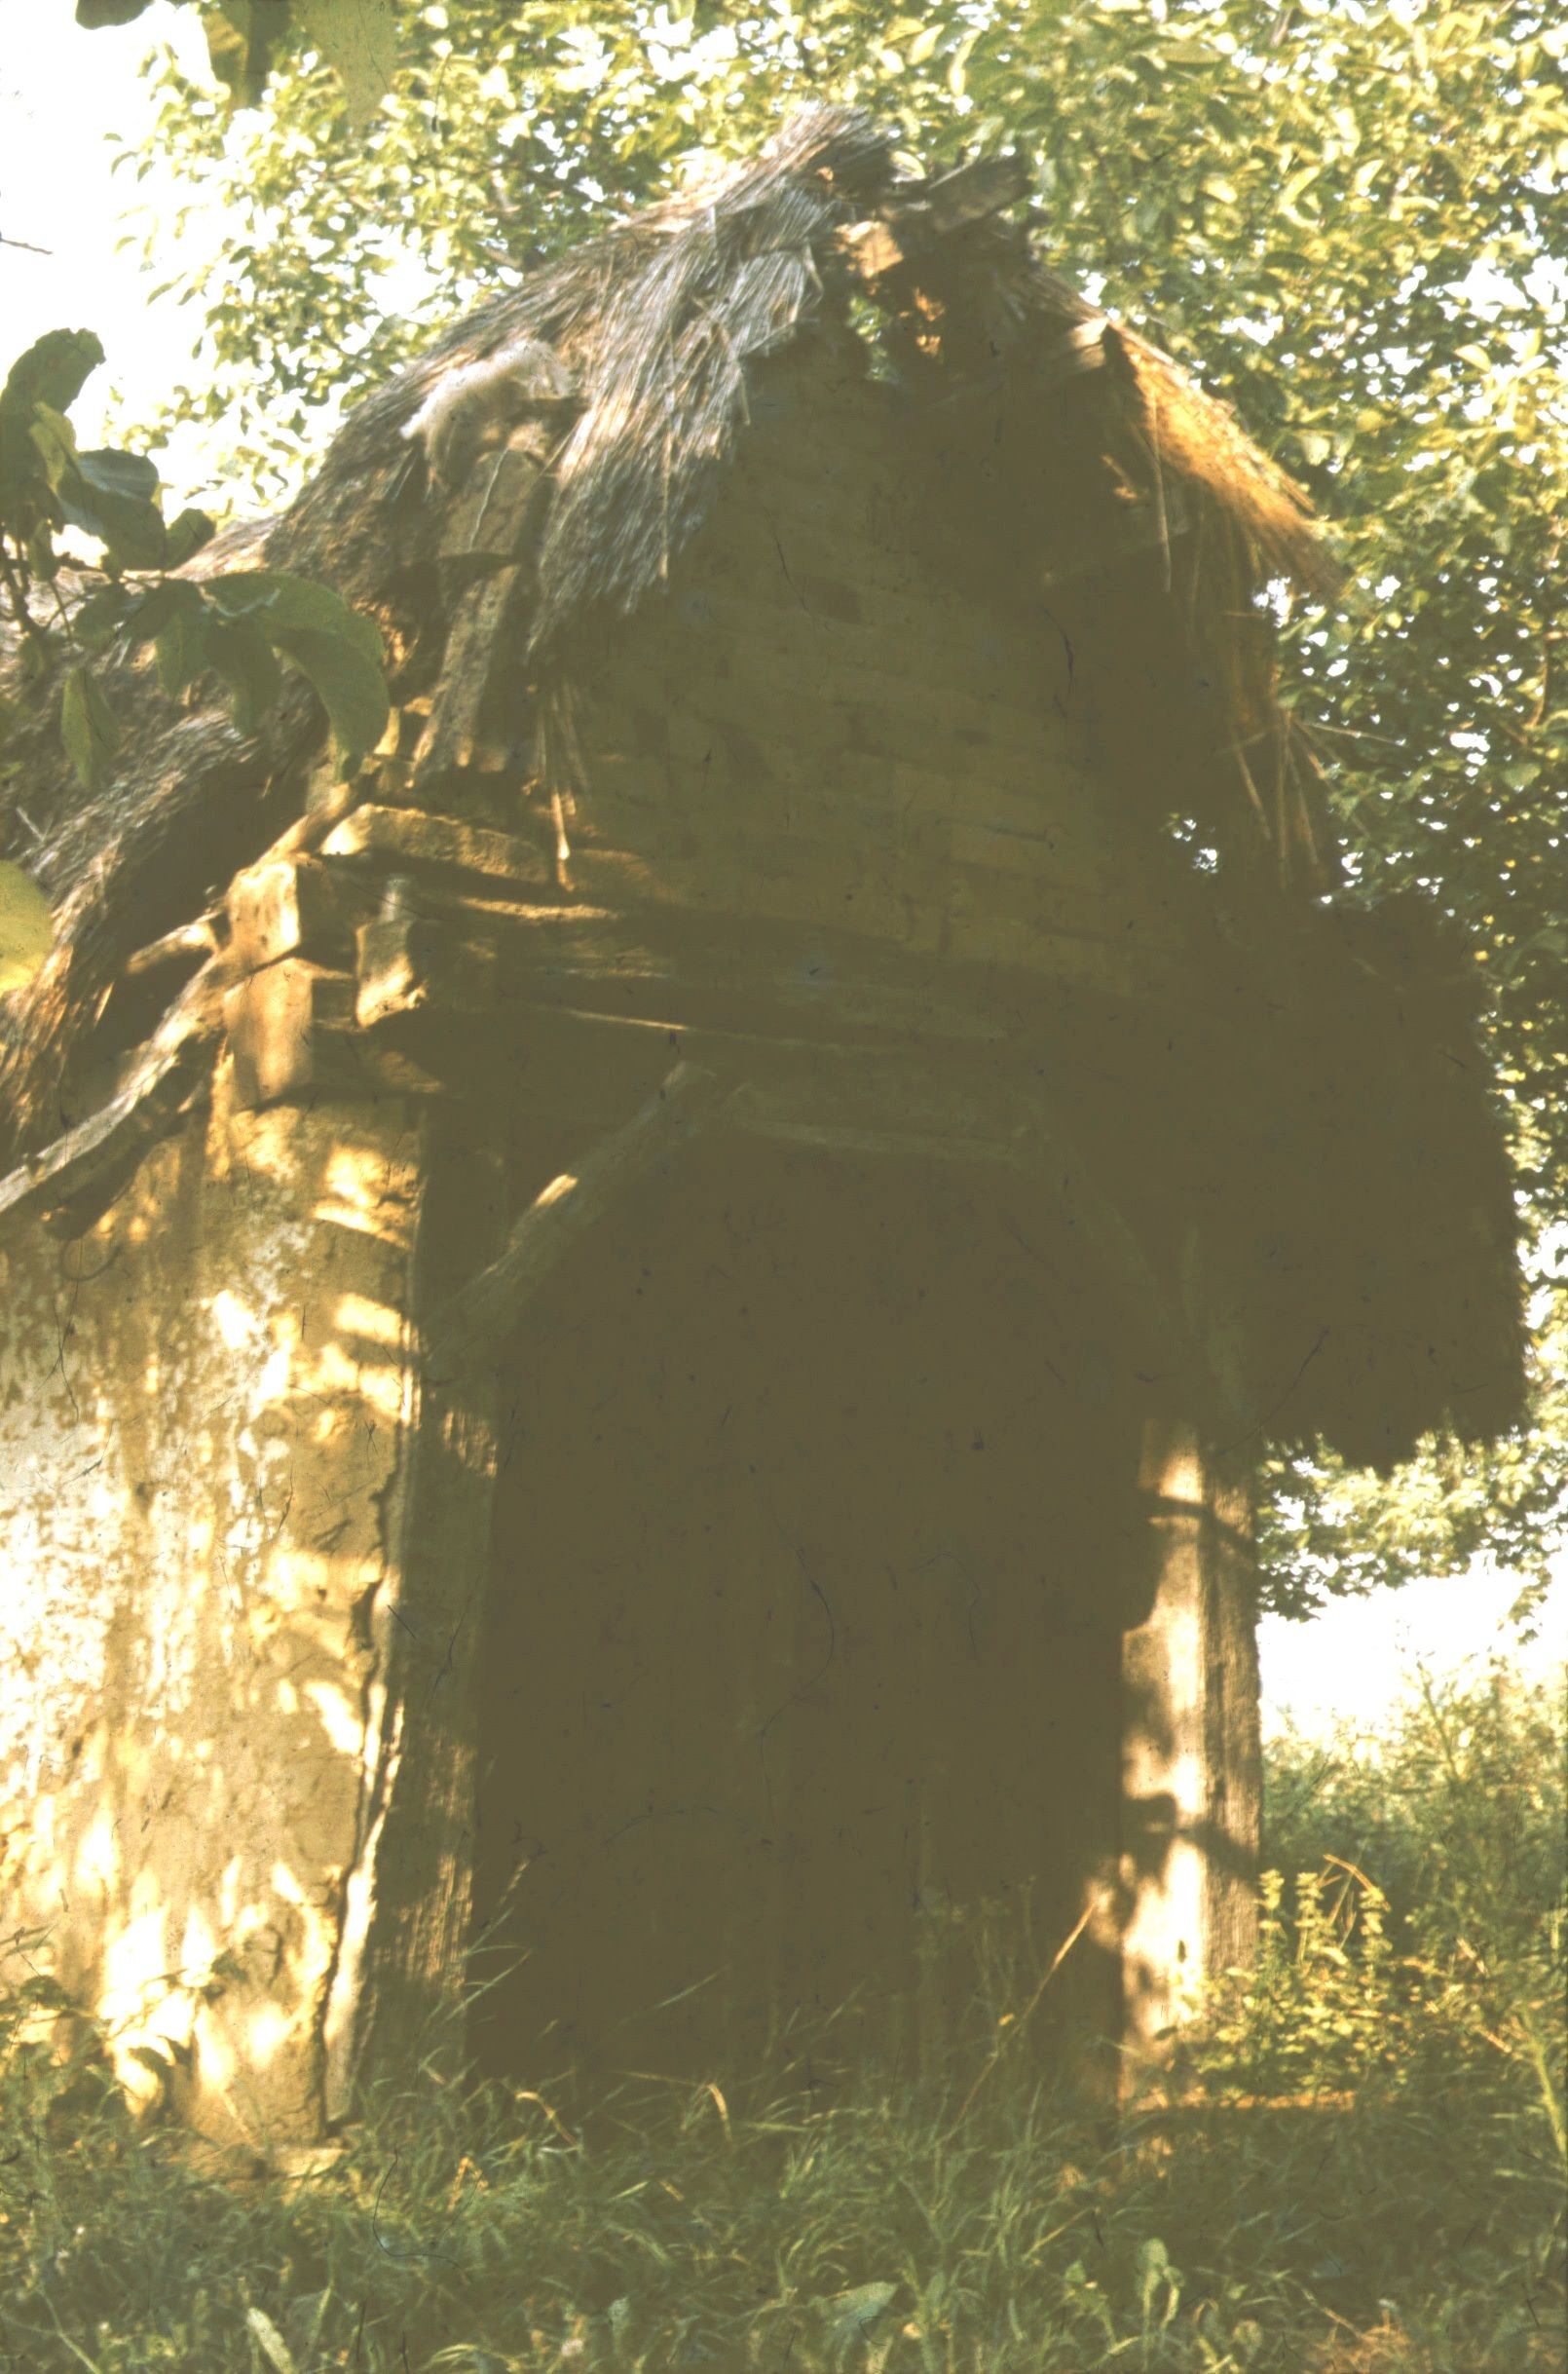 34. számú pince gádora (Rippl-Rónai Múzeum CC BY-NC-ND)